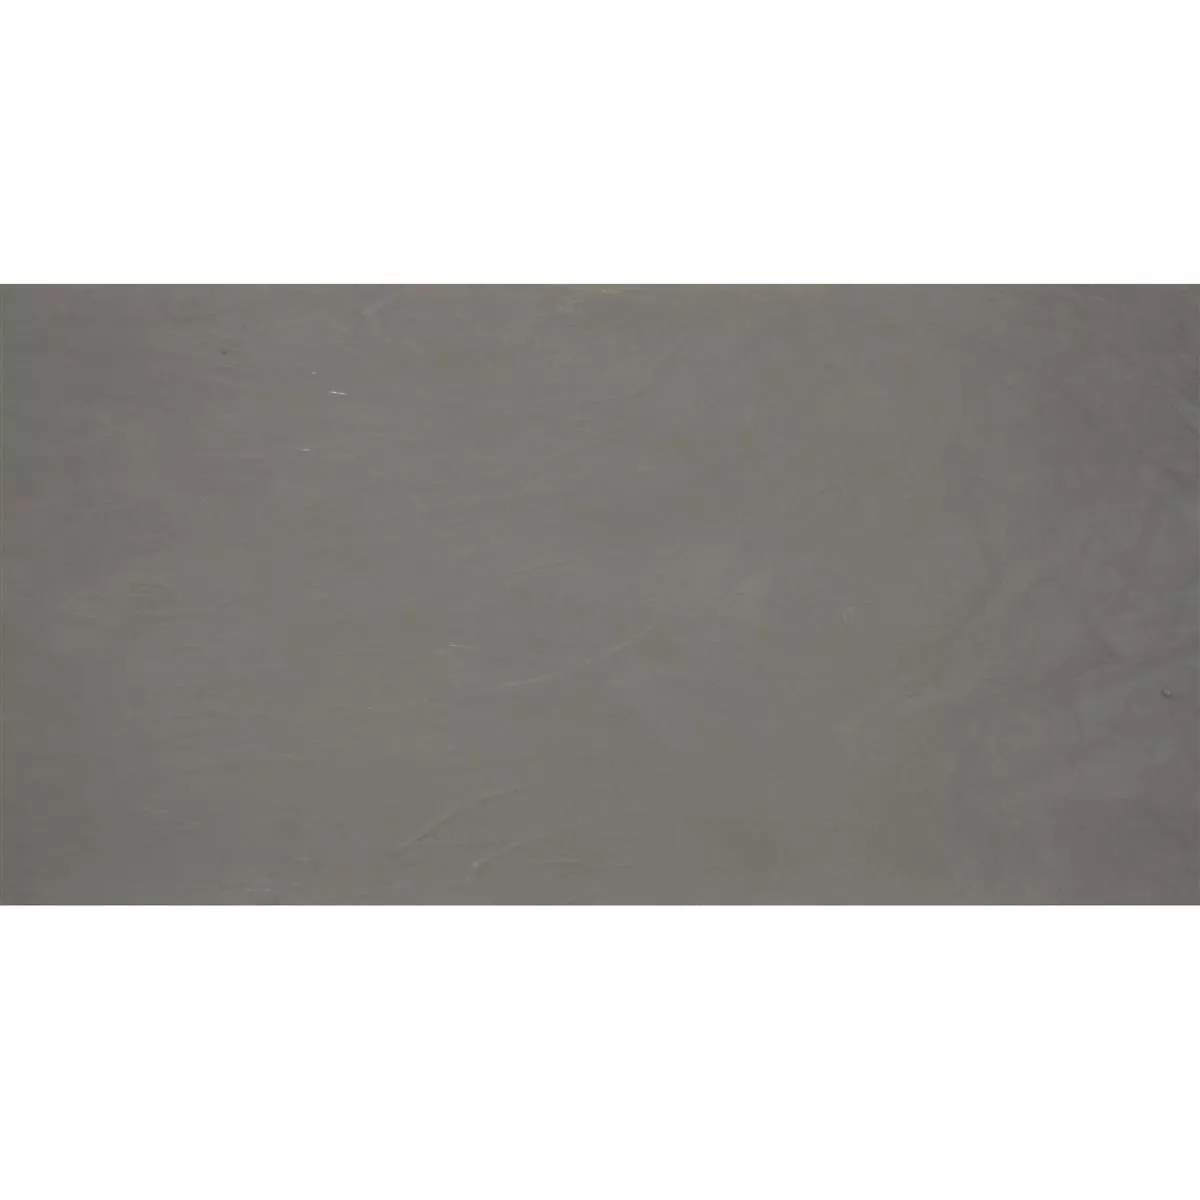 Staklo Zidne Pločice Trend-Vi Supreme Dimgrey 30x60cm